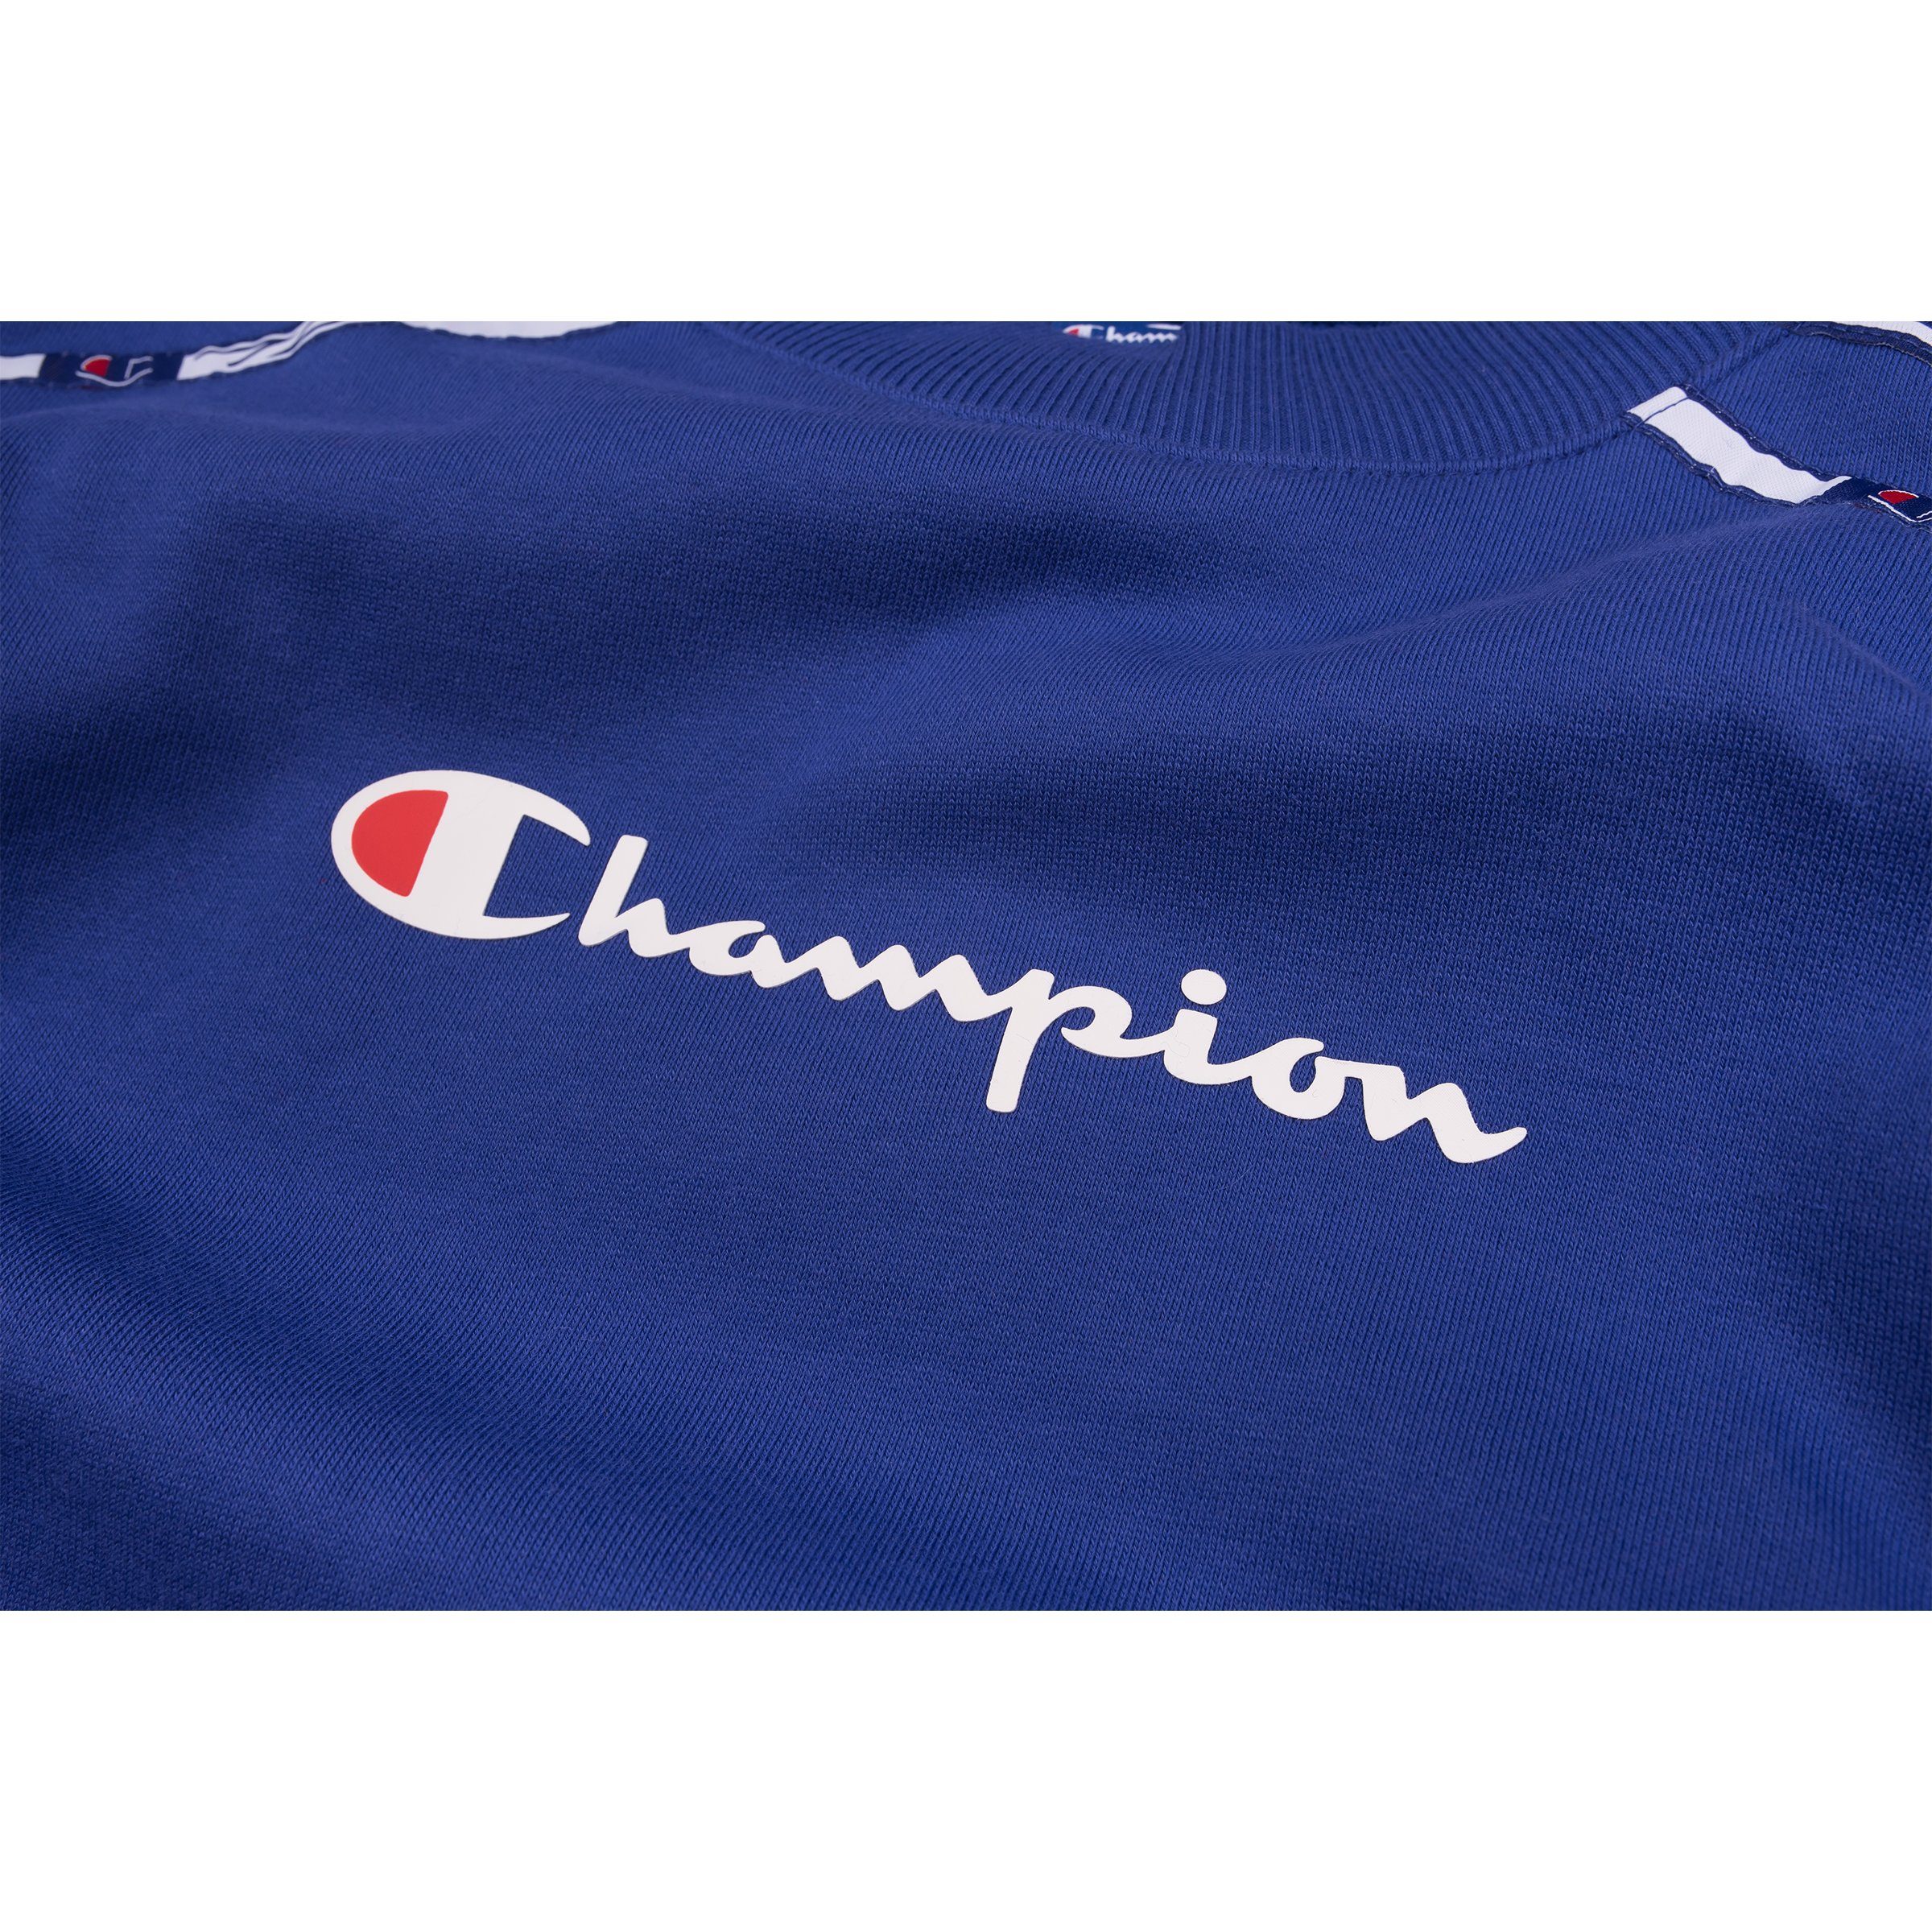 Sweatshirt Crewneck (ryr)/weiß Sweatshirt (scbl)/rot 113339 blau Champion Champion (wht) Damen